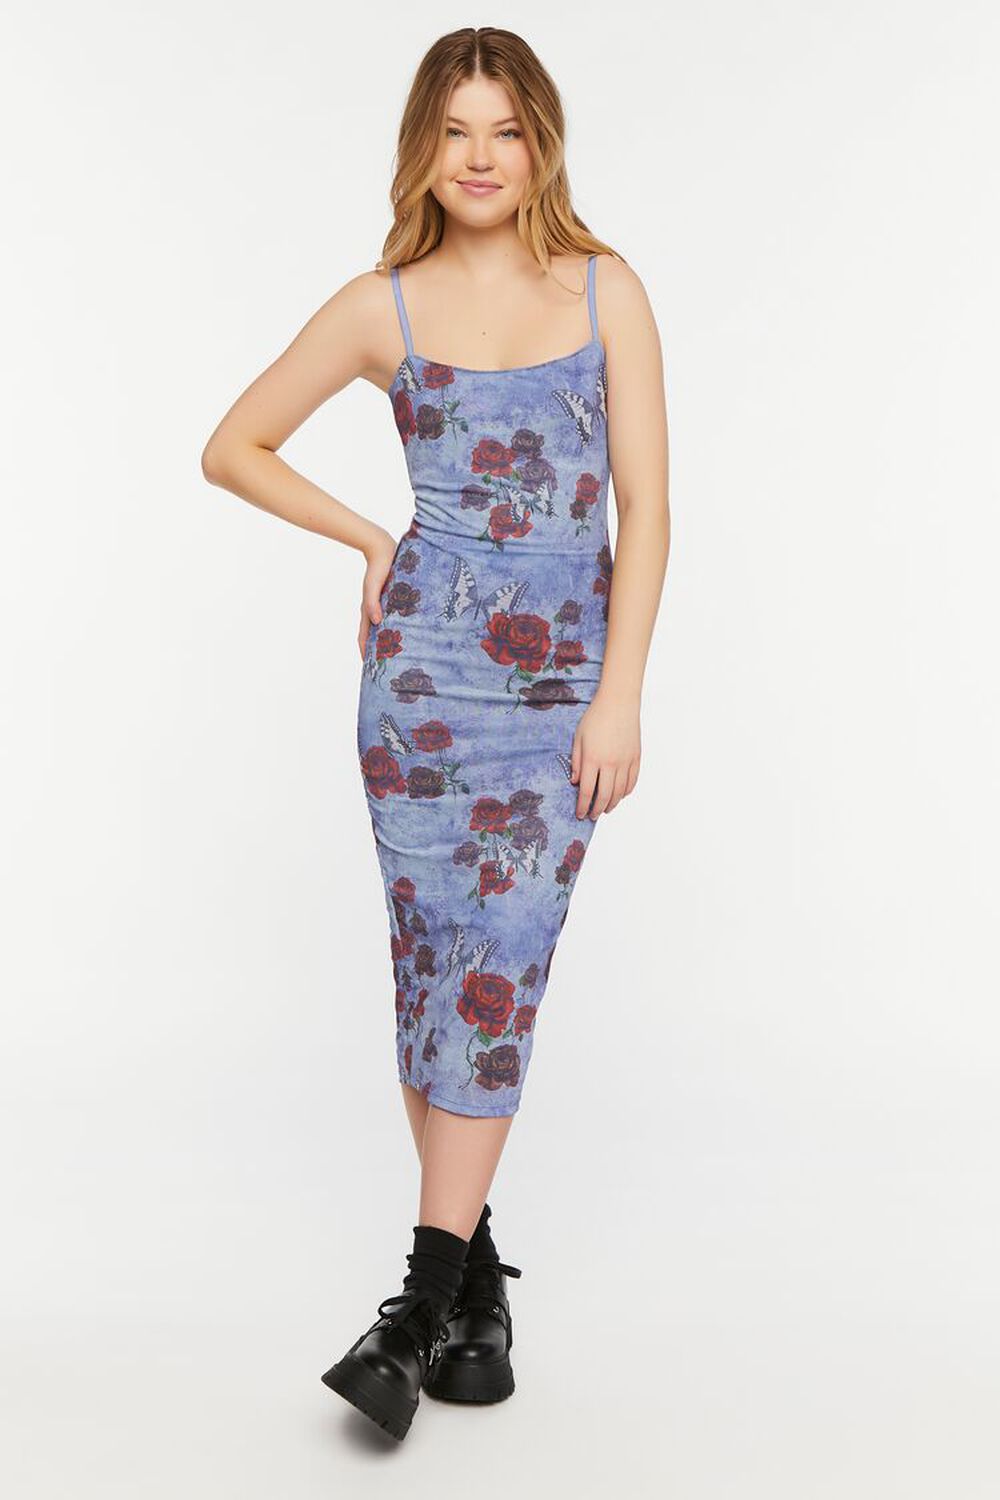 BLUE/MULTI Mesh Butterfly Rose Print Cami Dress, image 1